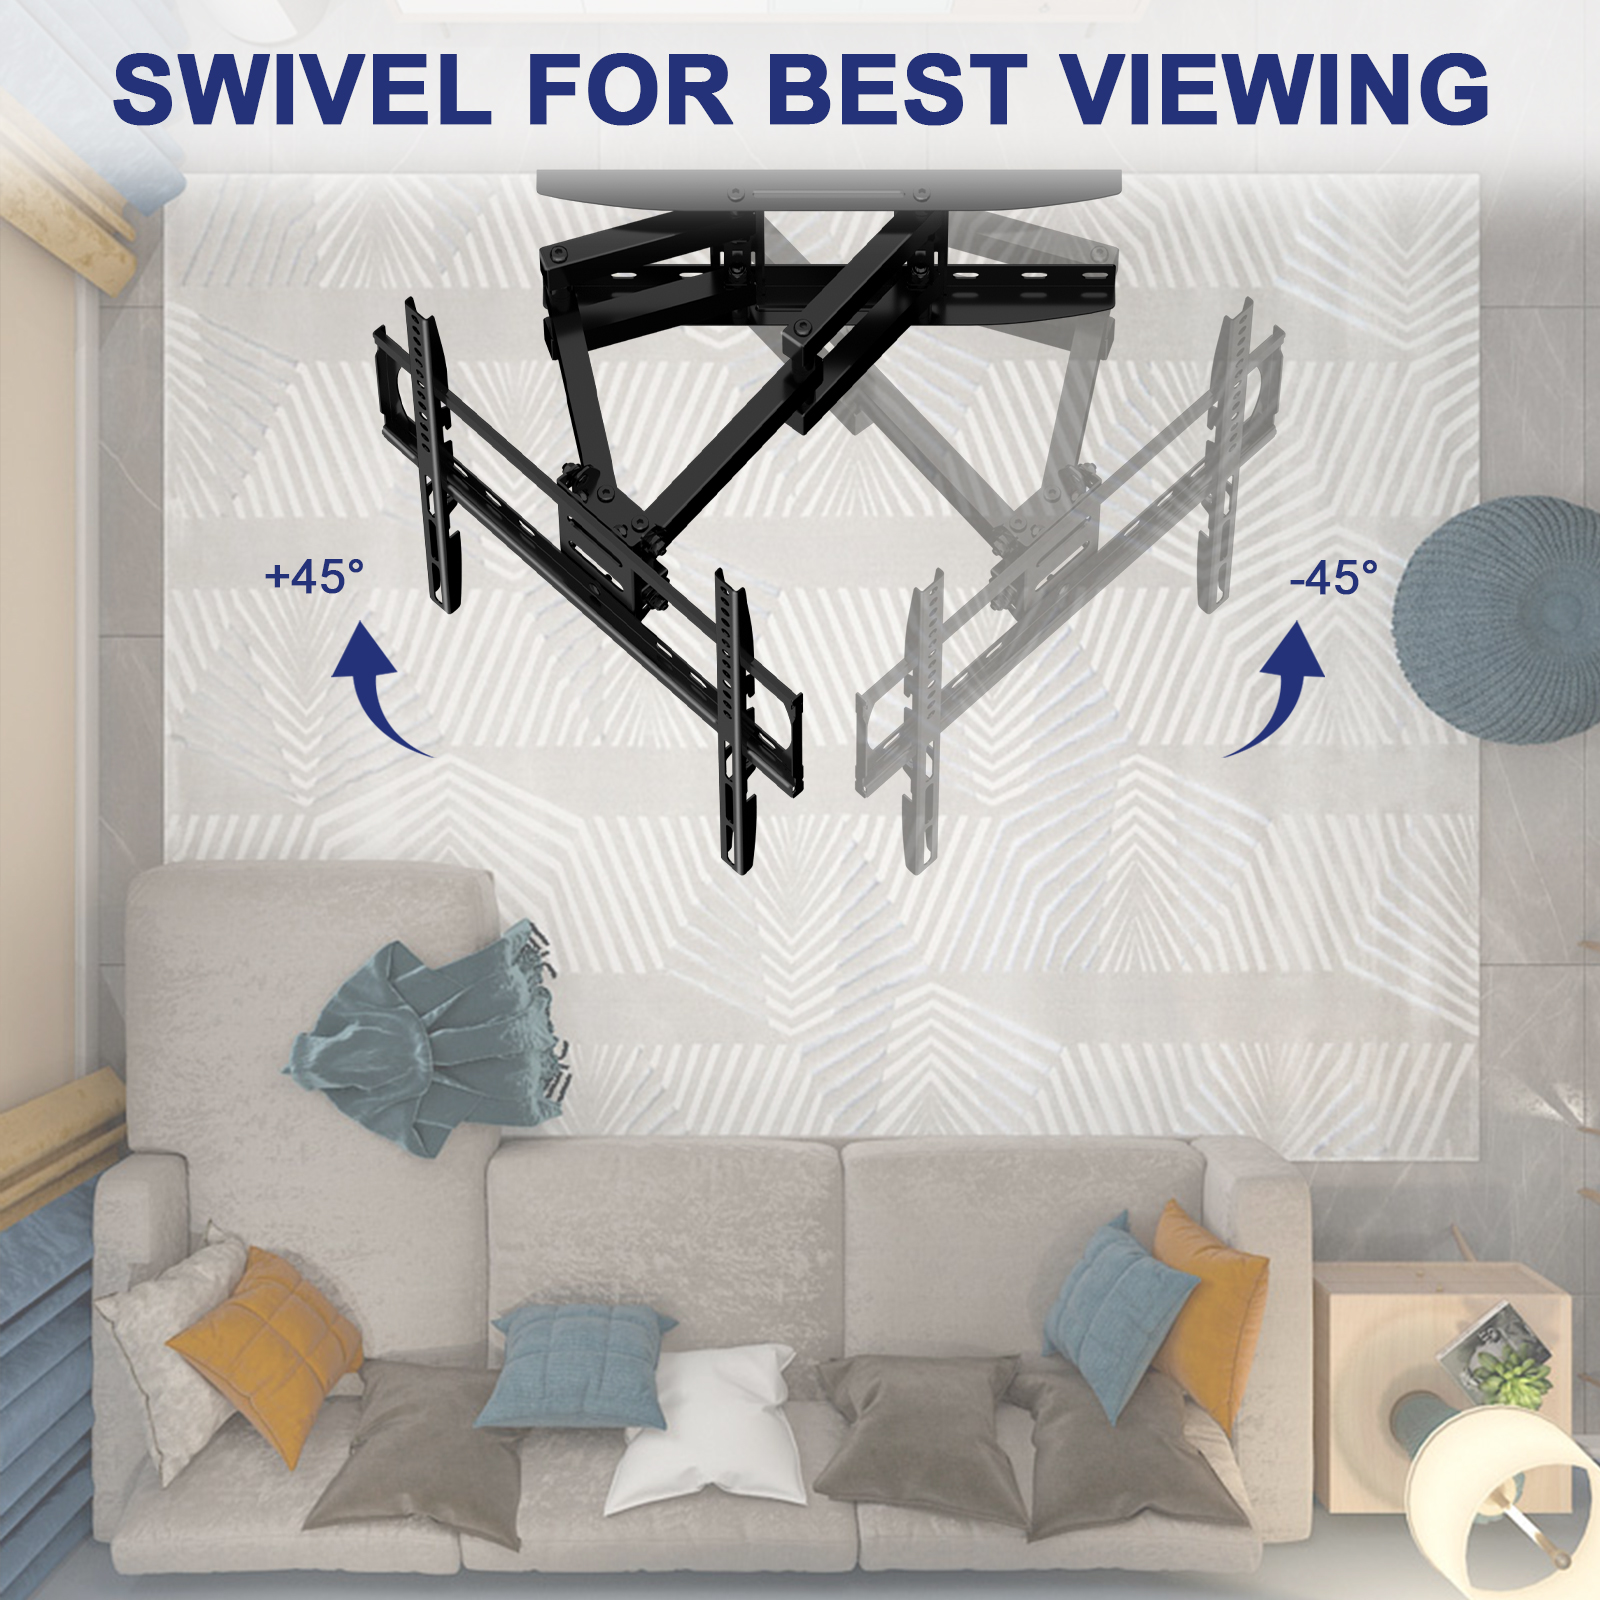 Full Motion TV Wall Mount Swivel and Tilt for Most 26-55 Inch TVs